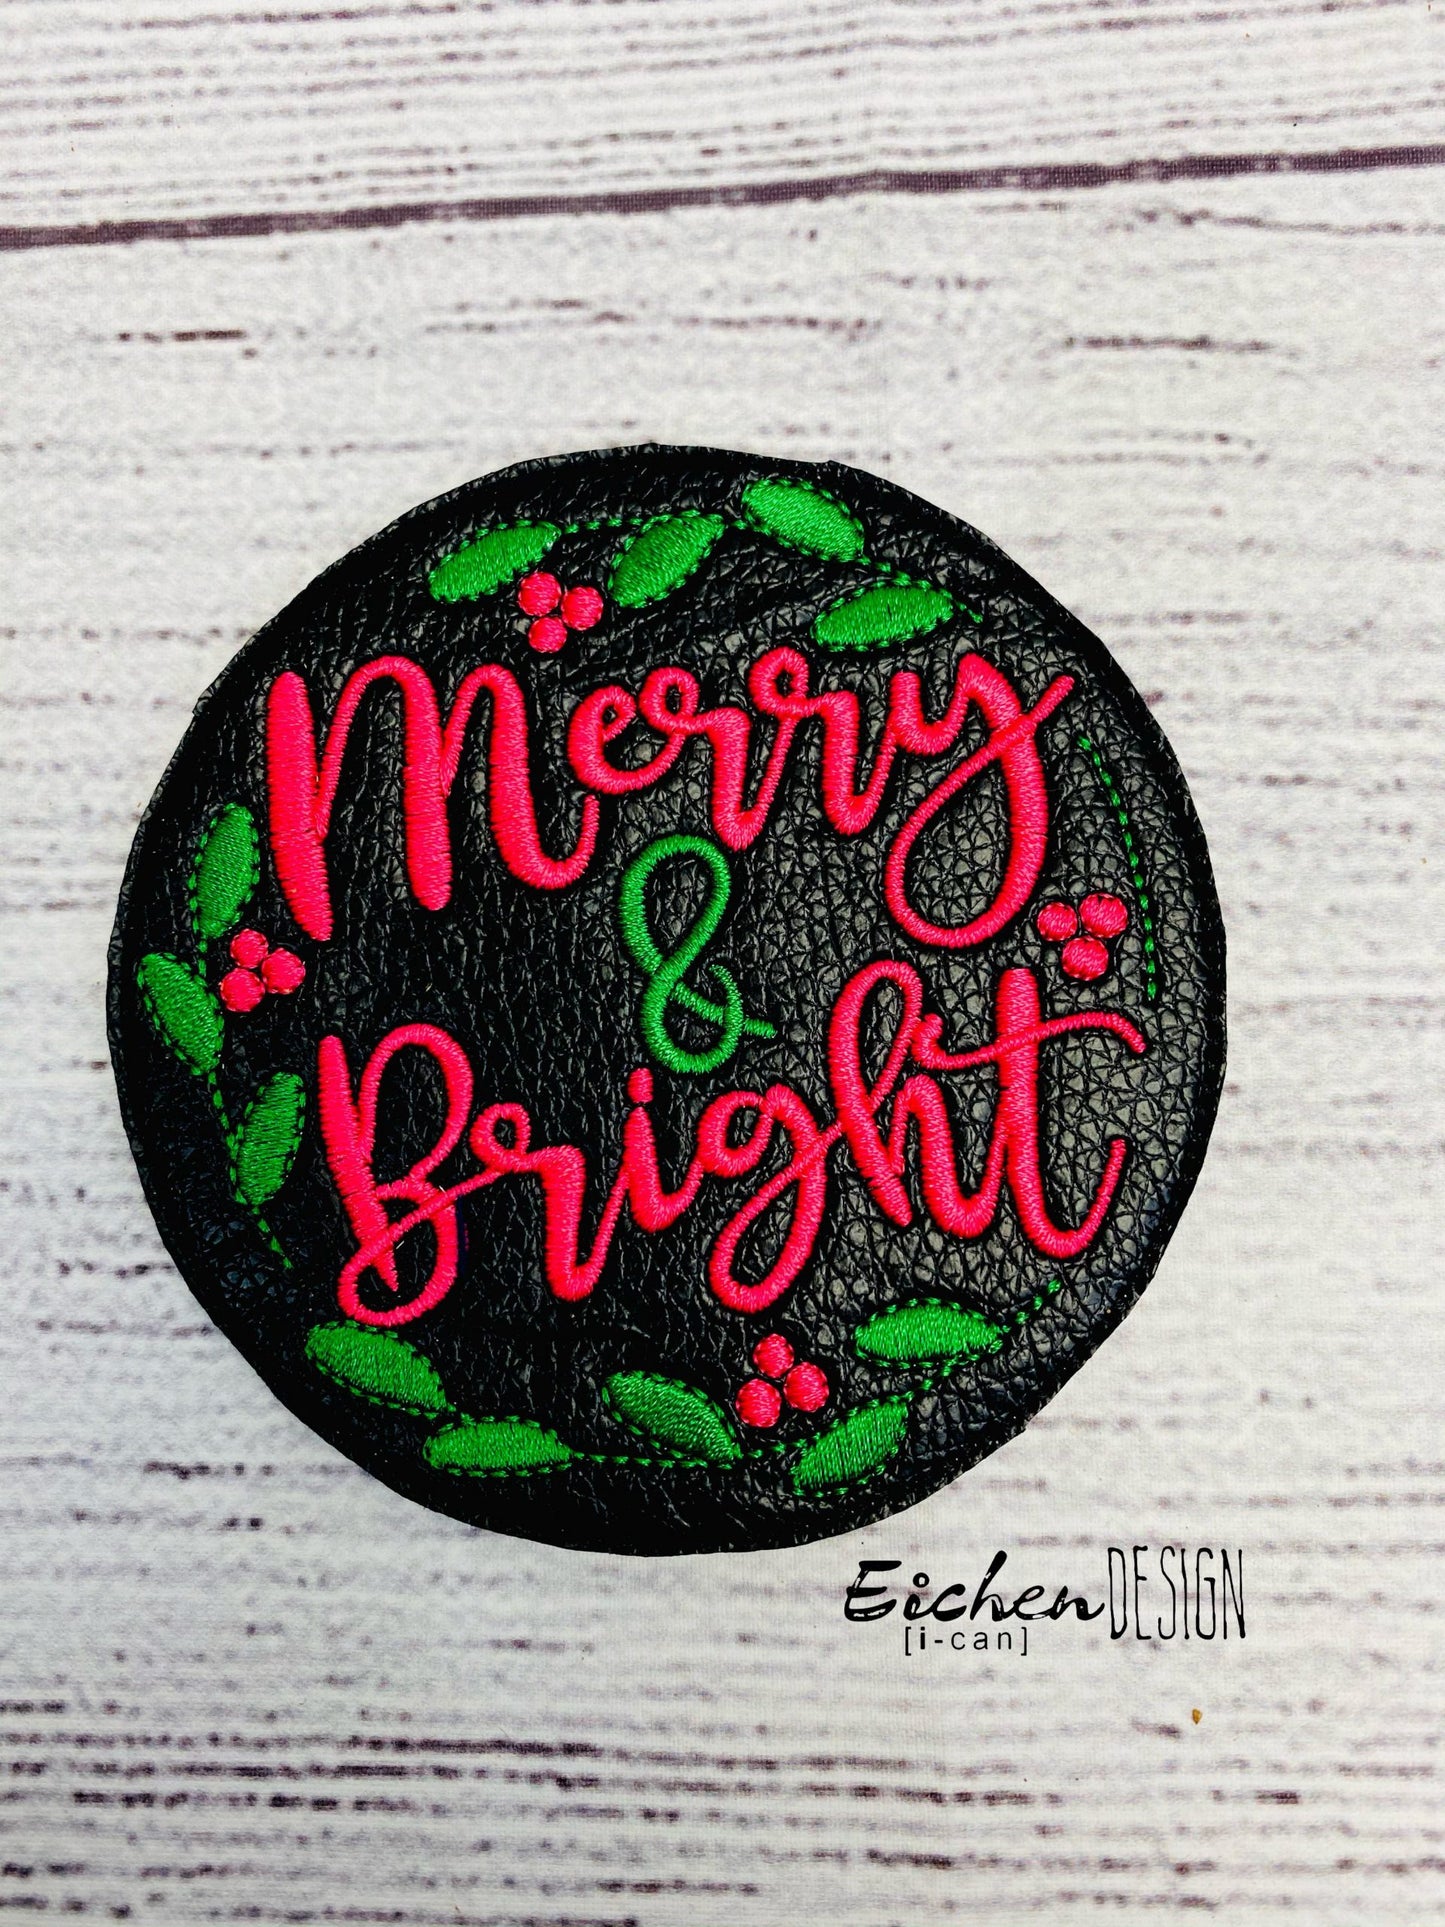 Holiday Frame Coaster Set 4x4 - DIGITAL Embroidery DESIGN